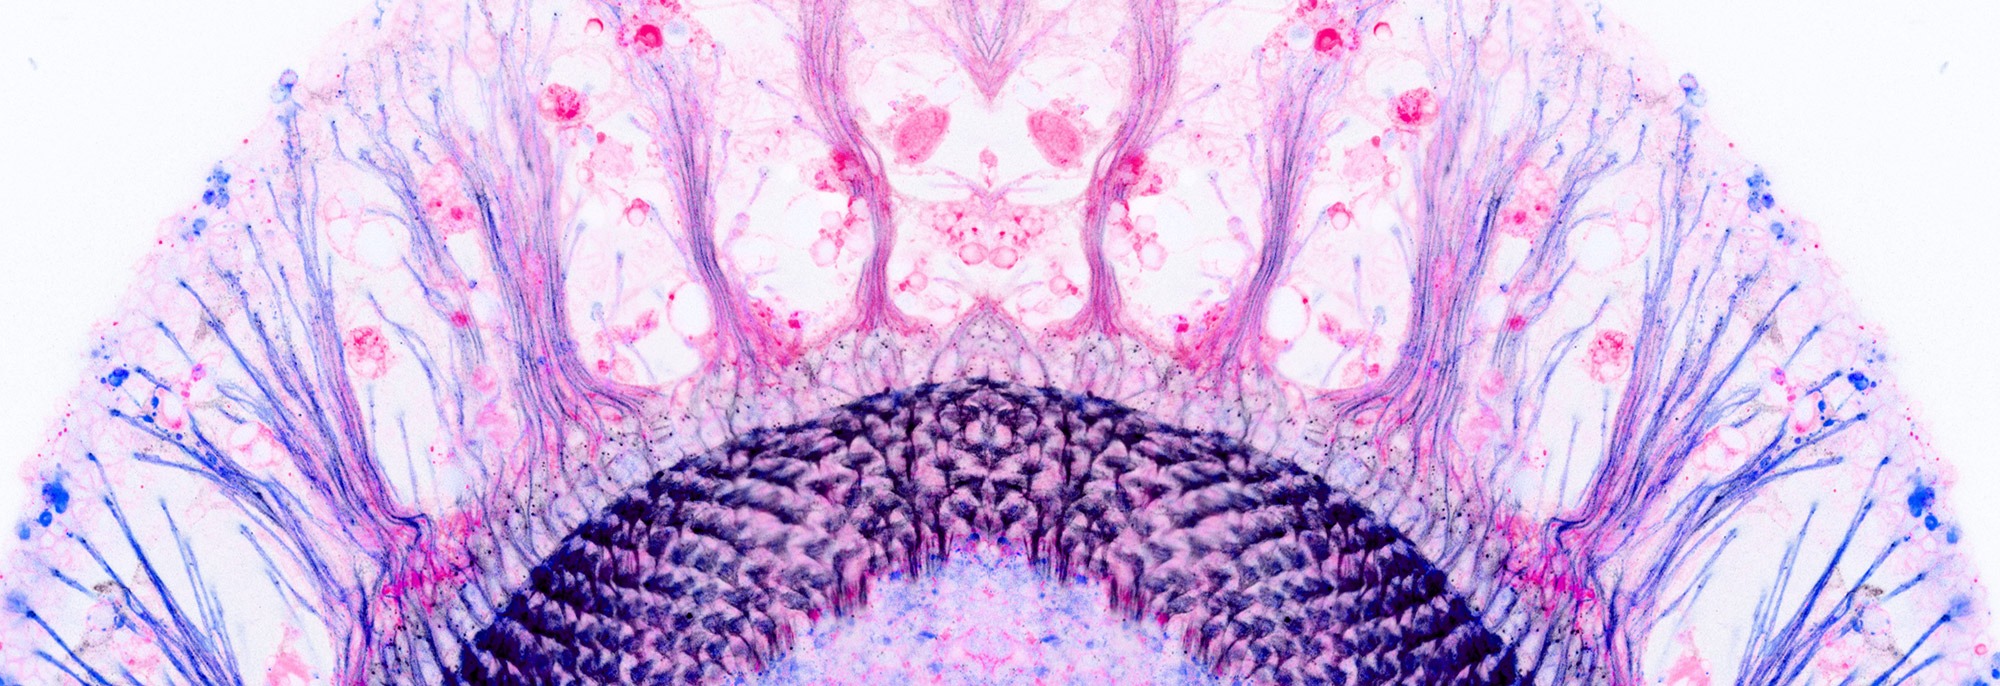 Image of Drosophila brain